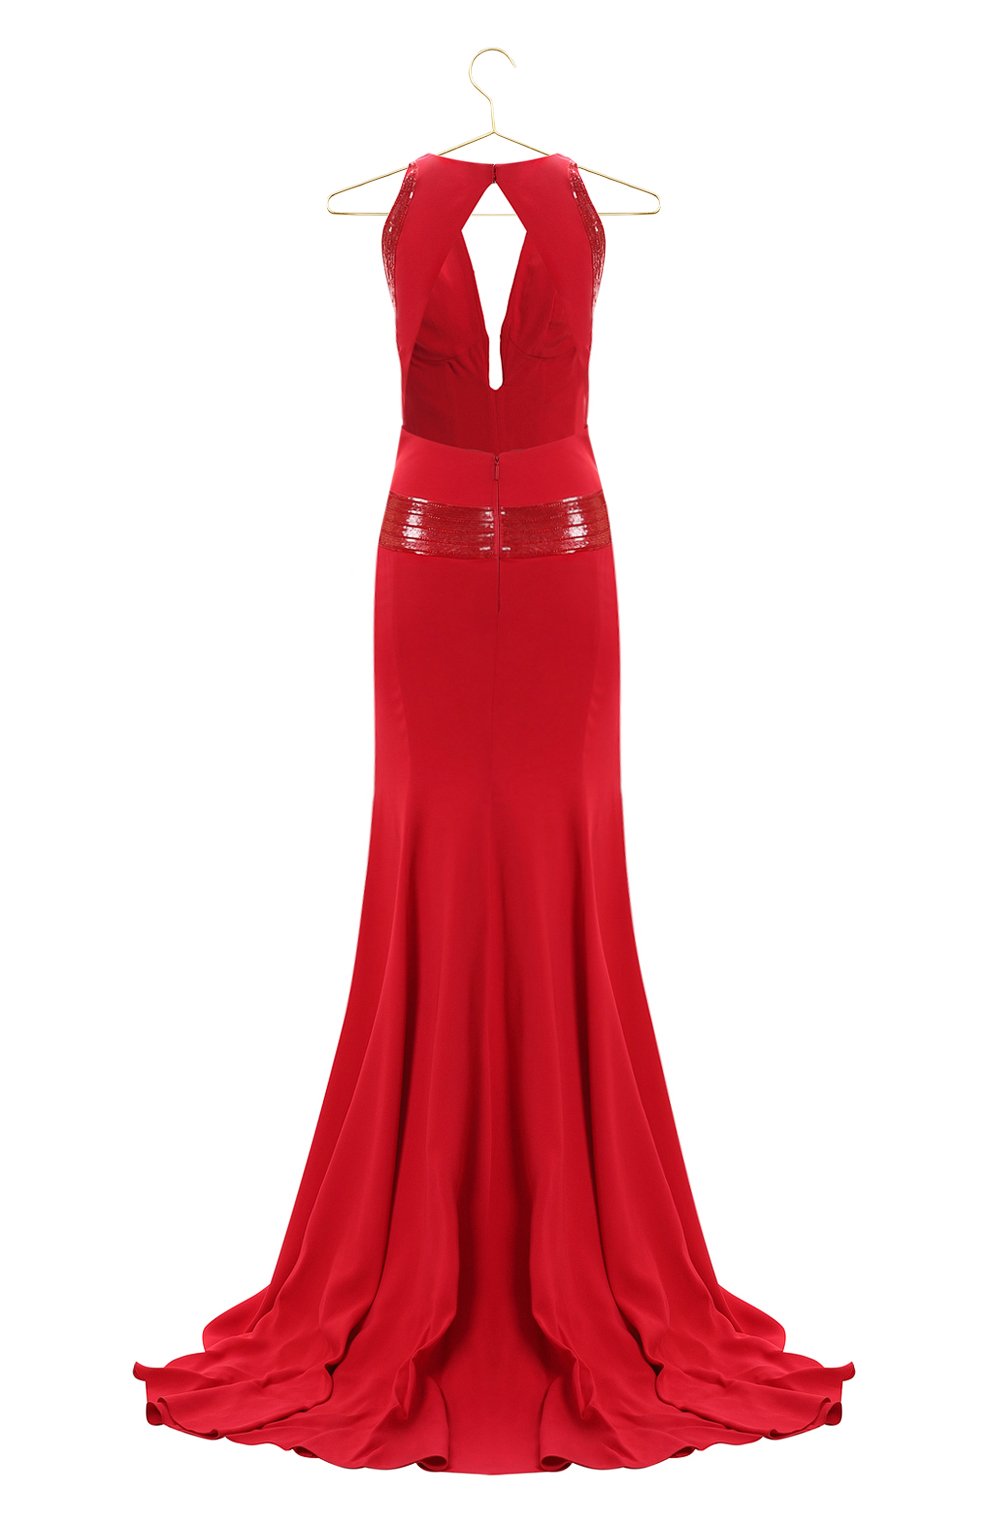 Платье из вискозы | Roberto Cavalli | Красный - 2